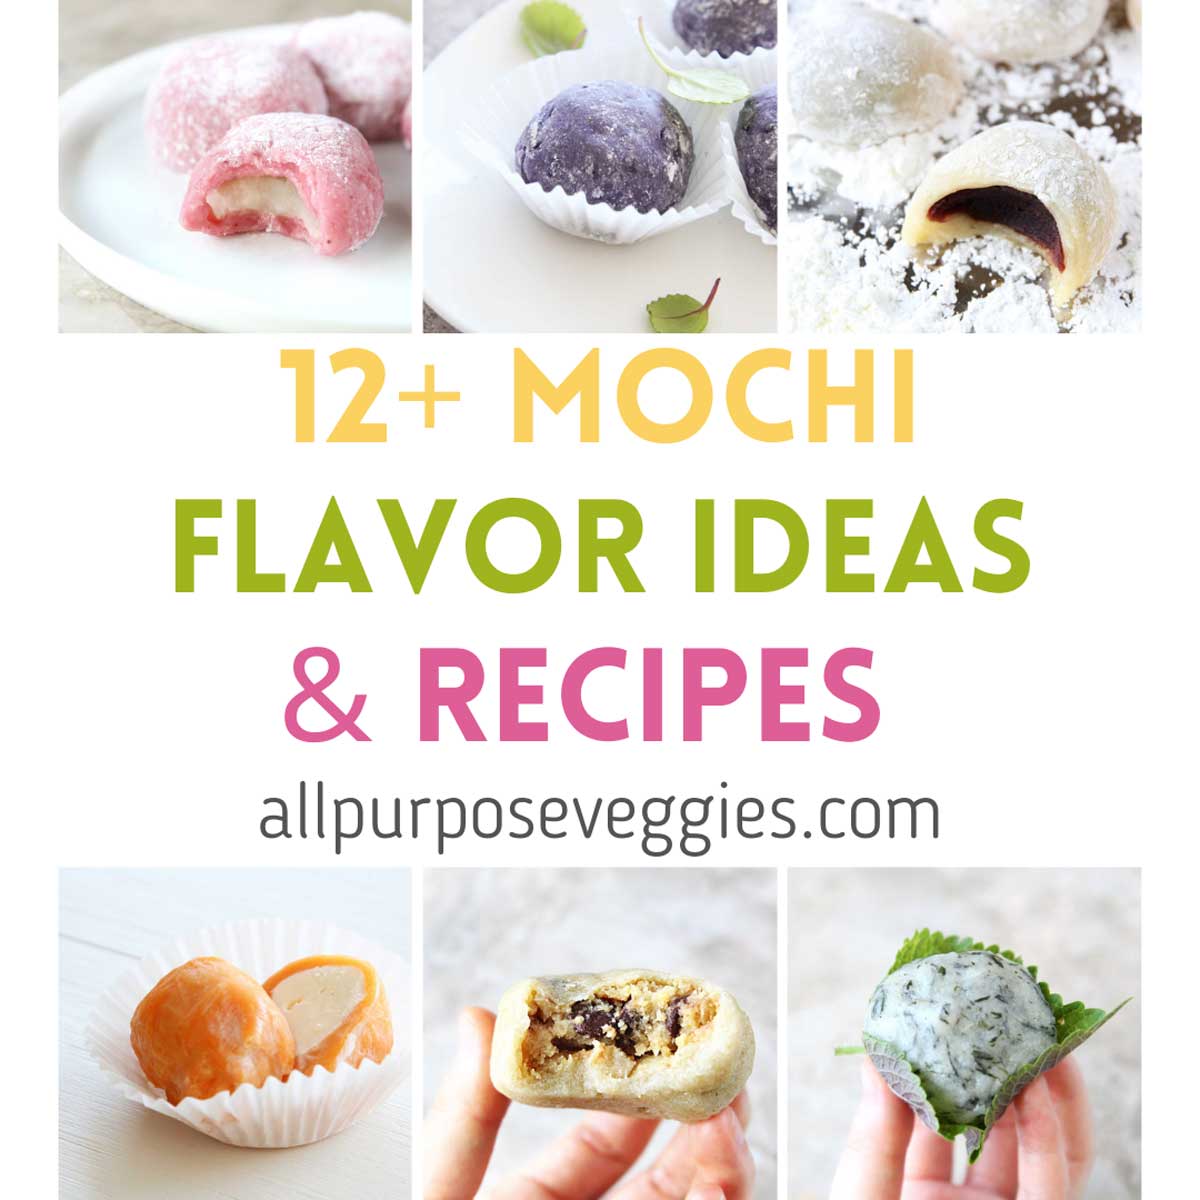 How to Make Mochi from Scratch! (w/ a Mochi Maker) - mochi